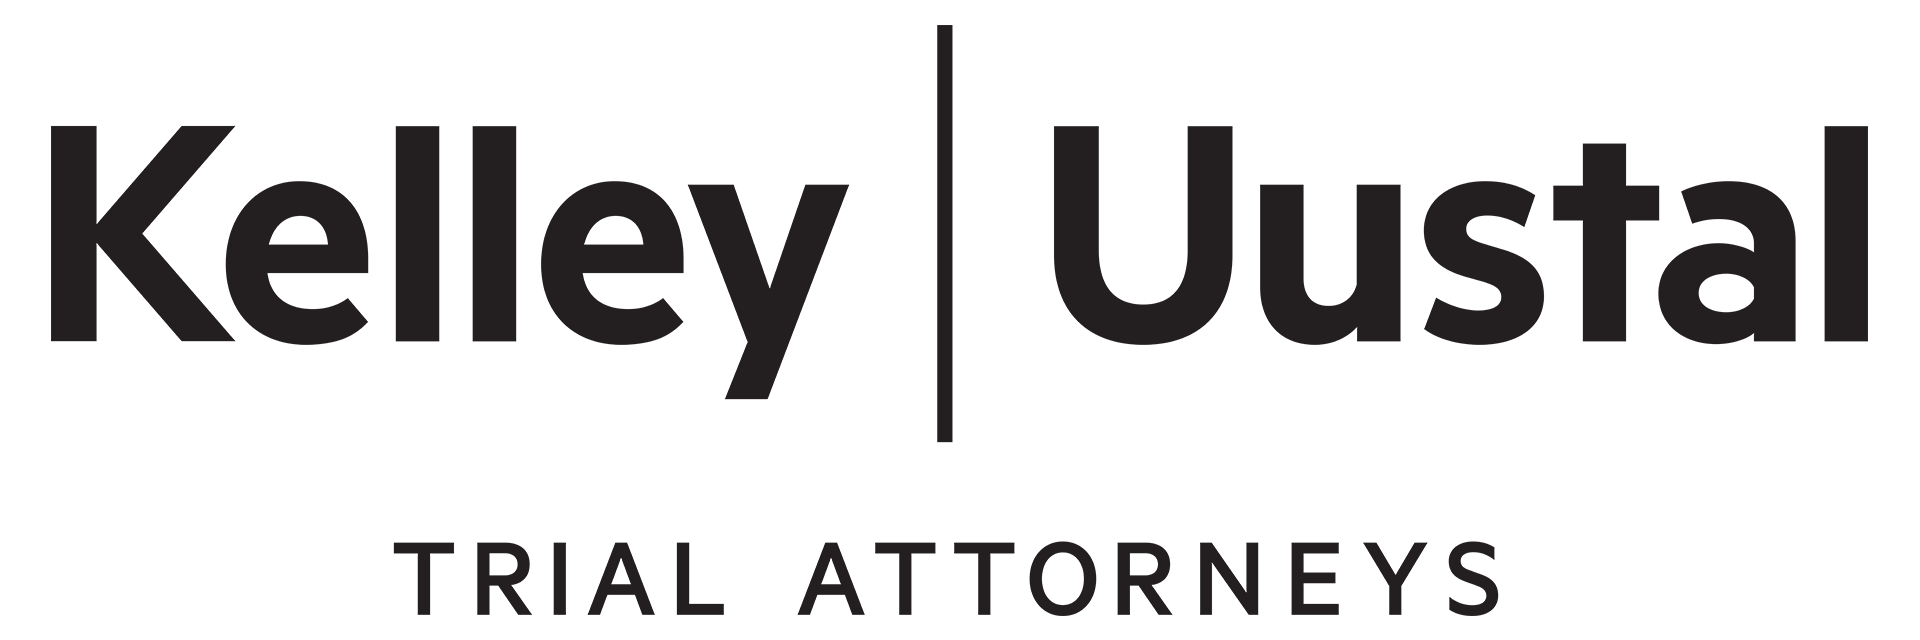 Kelley | Uustal logo